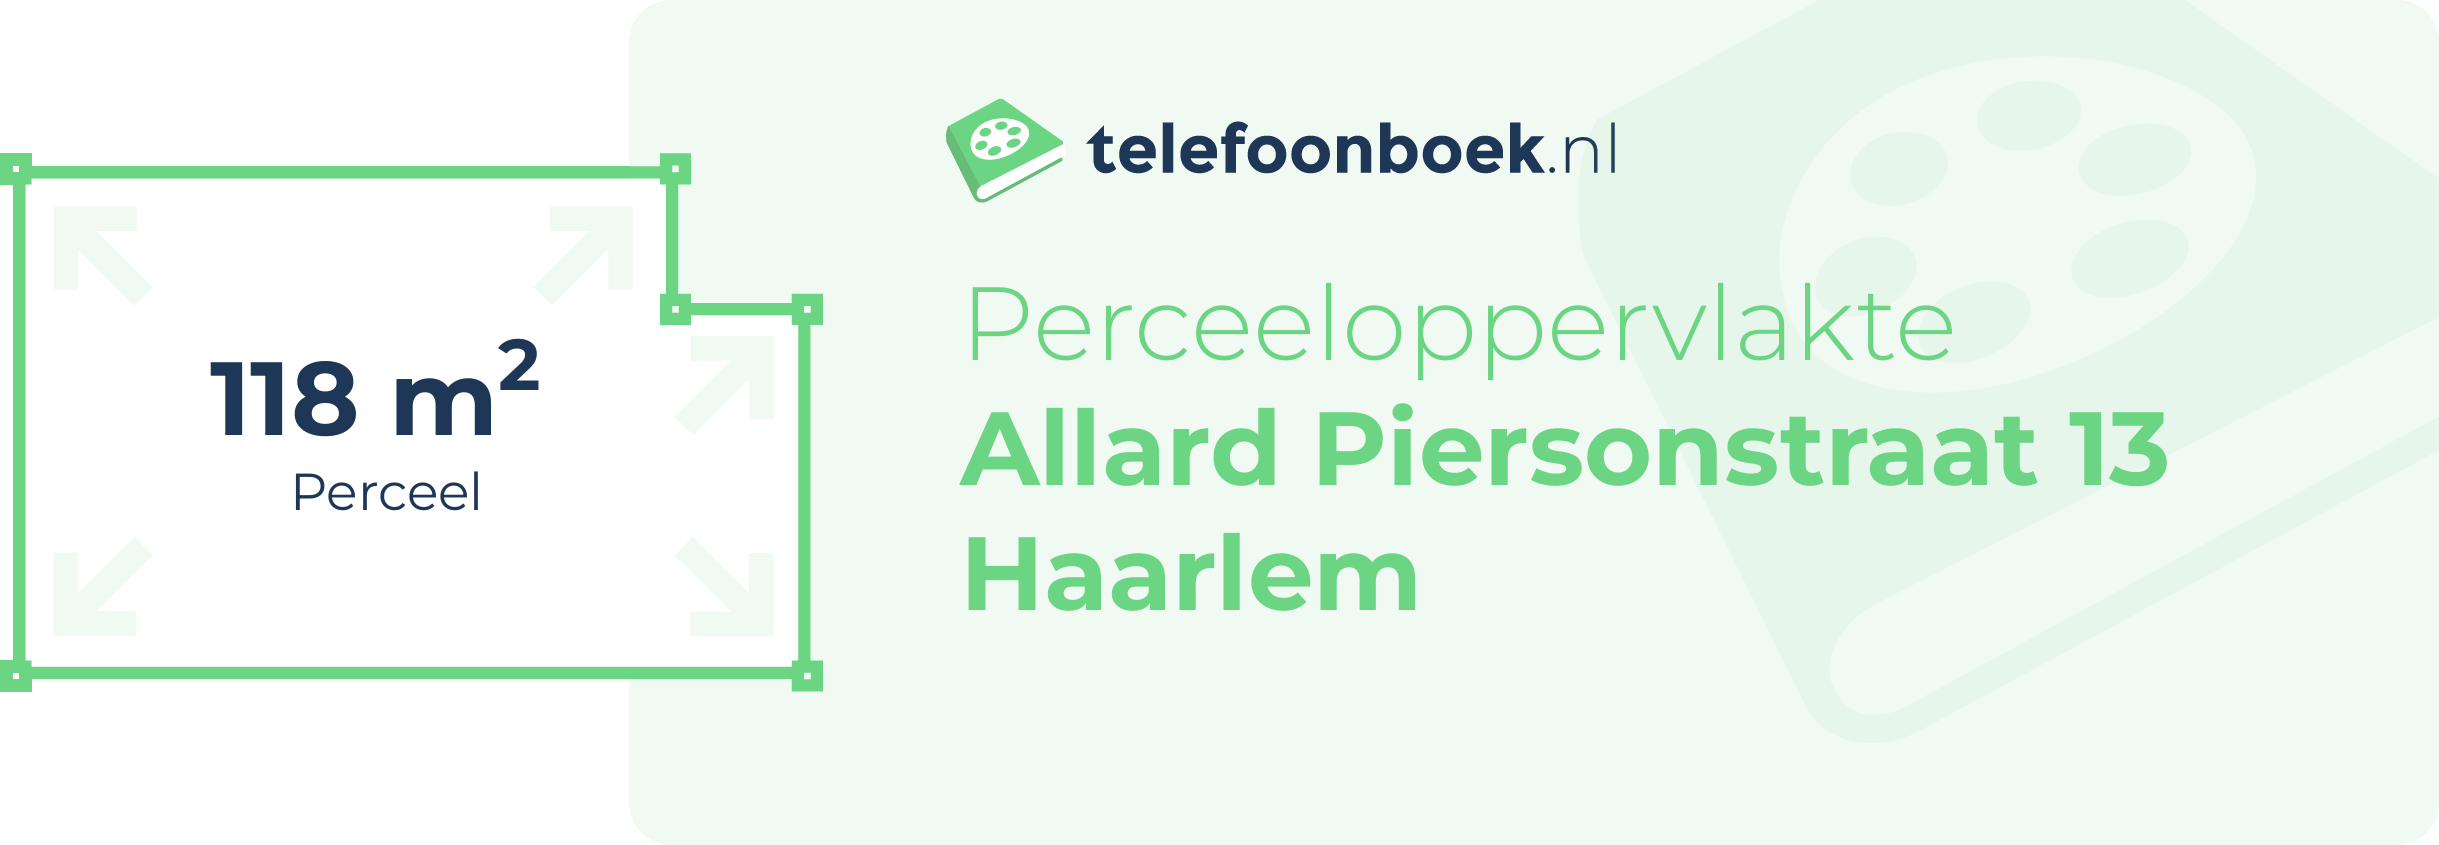 Perceeloppervlakte Allard Piersonstraat 13 Haarlem